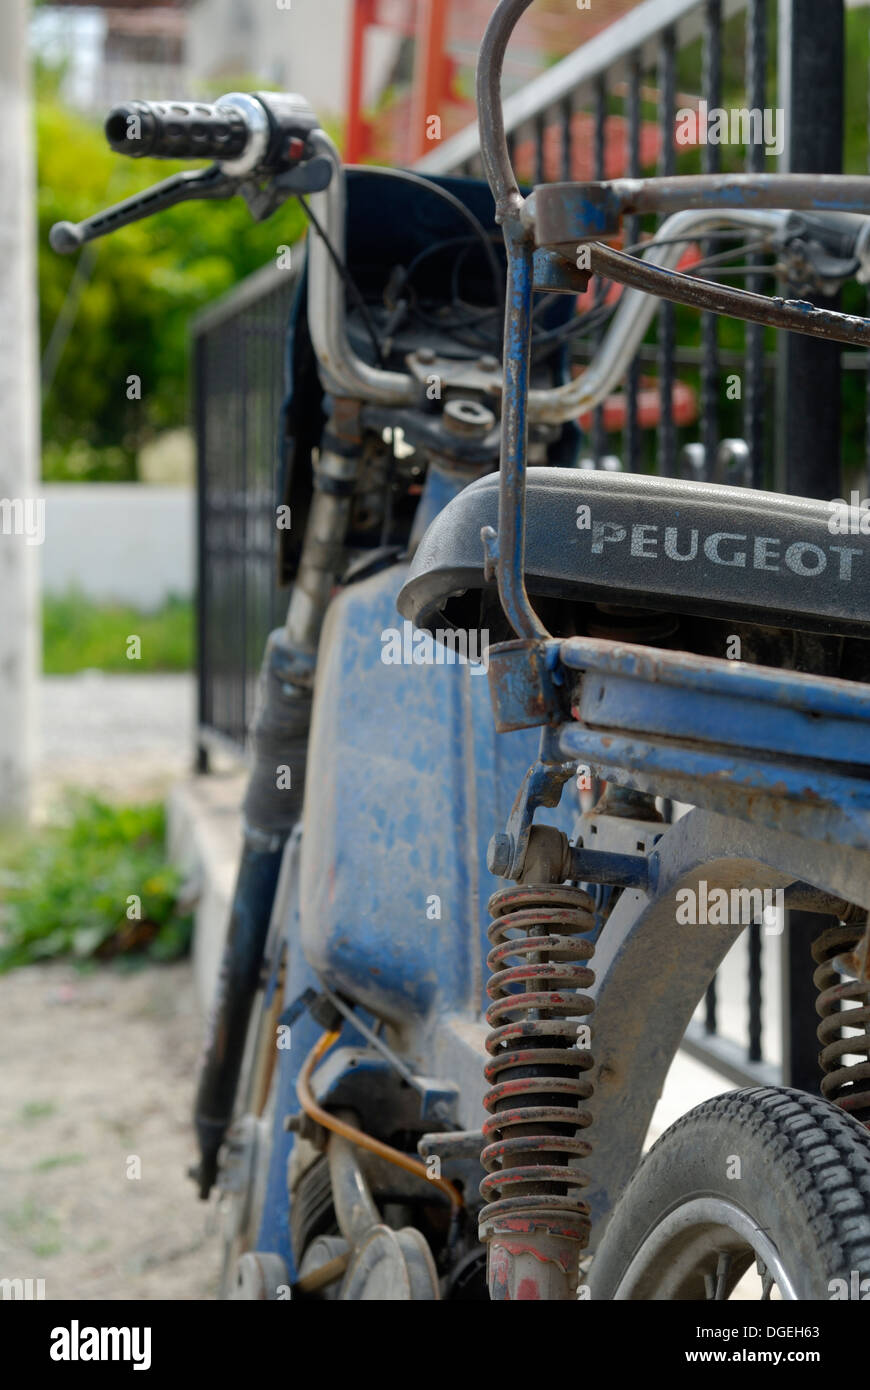 Old Peugeot Motorcycle, Yenişakran, Aliağa, İzmir, Turkey Stock Photo